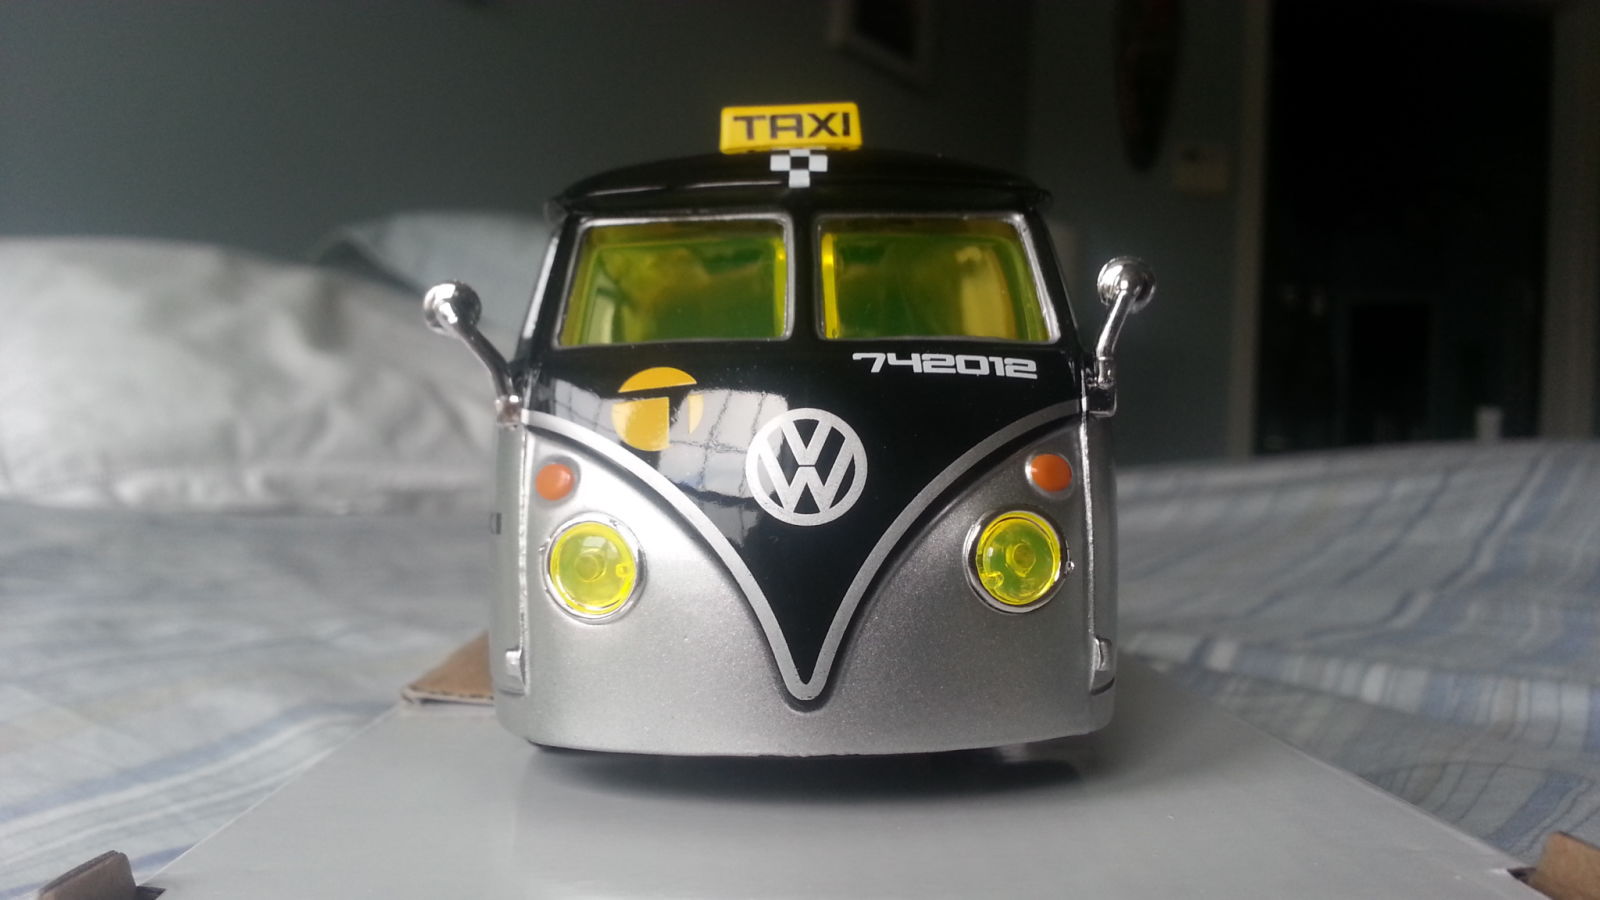 Illustration for article titled VW taxi van!